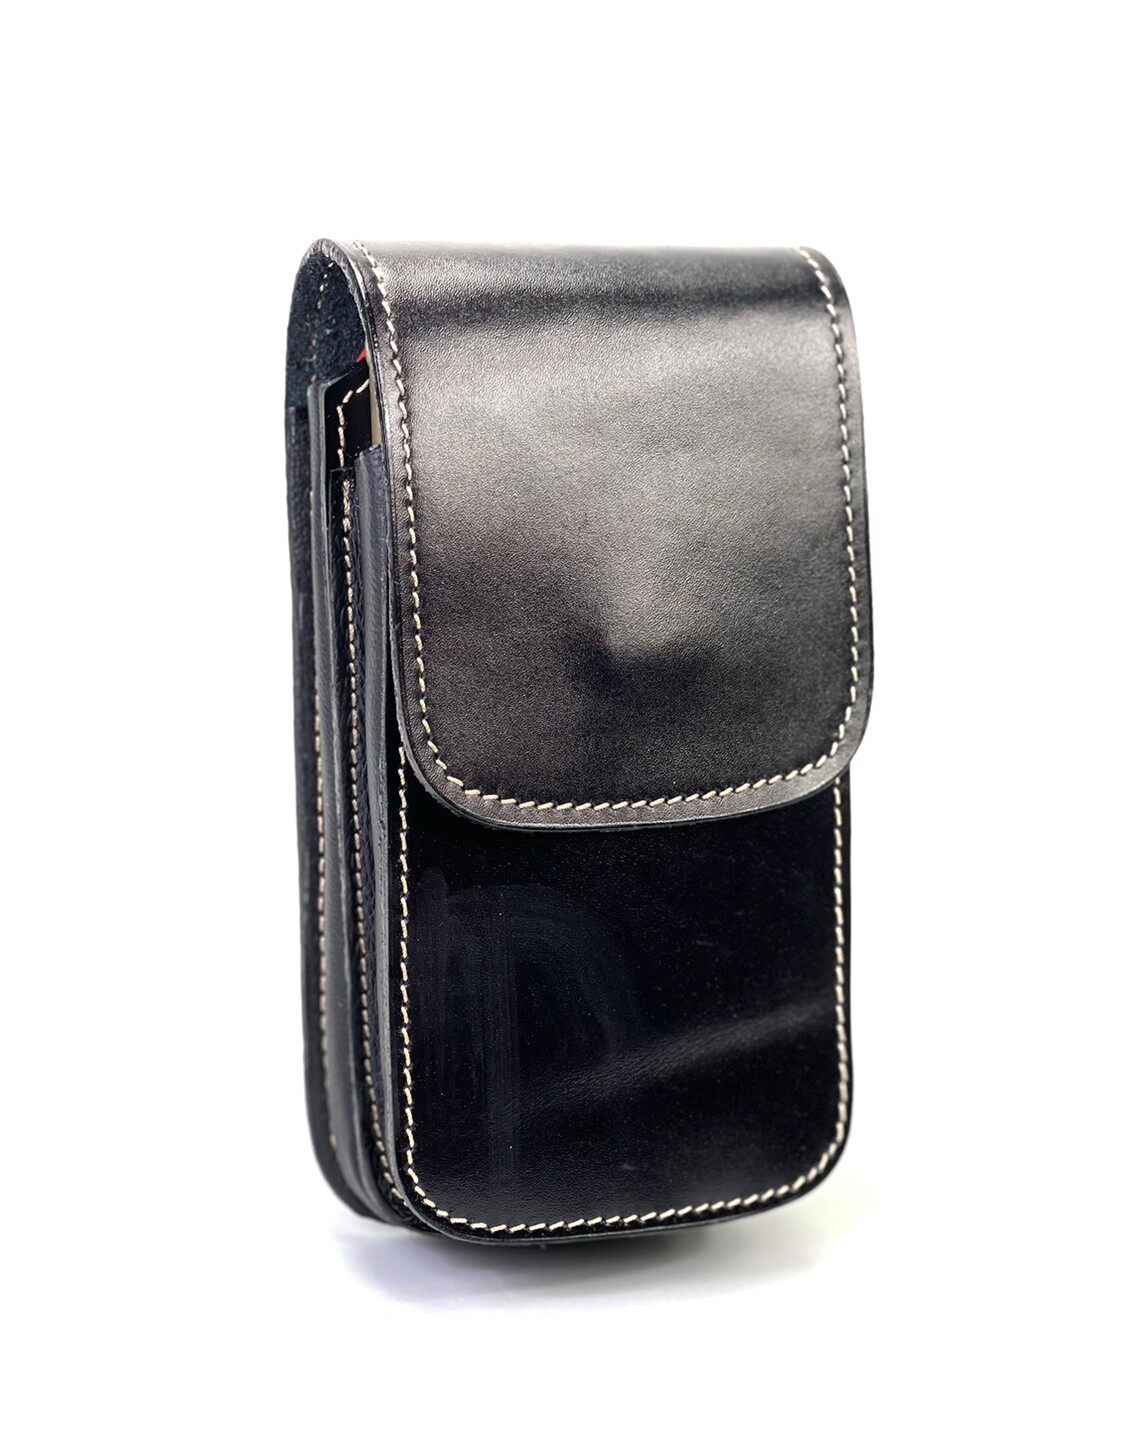 Chinatown Leather กระเป๋ามือถือหนังวัวแท้ร้อยเข็มขัด แนวตั้ง iphone 6-7-8 พลัสได้ 2 เครื่อง สีน้ำตาลเข้ม ดำ